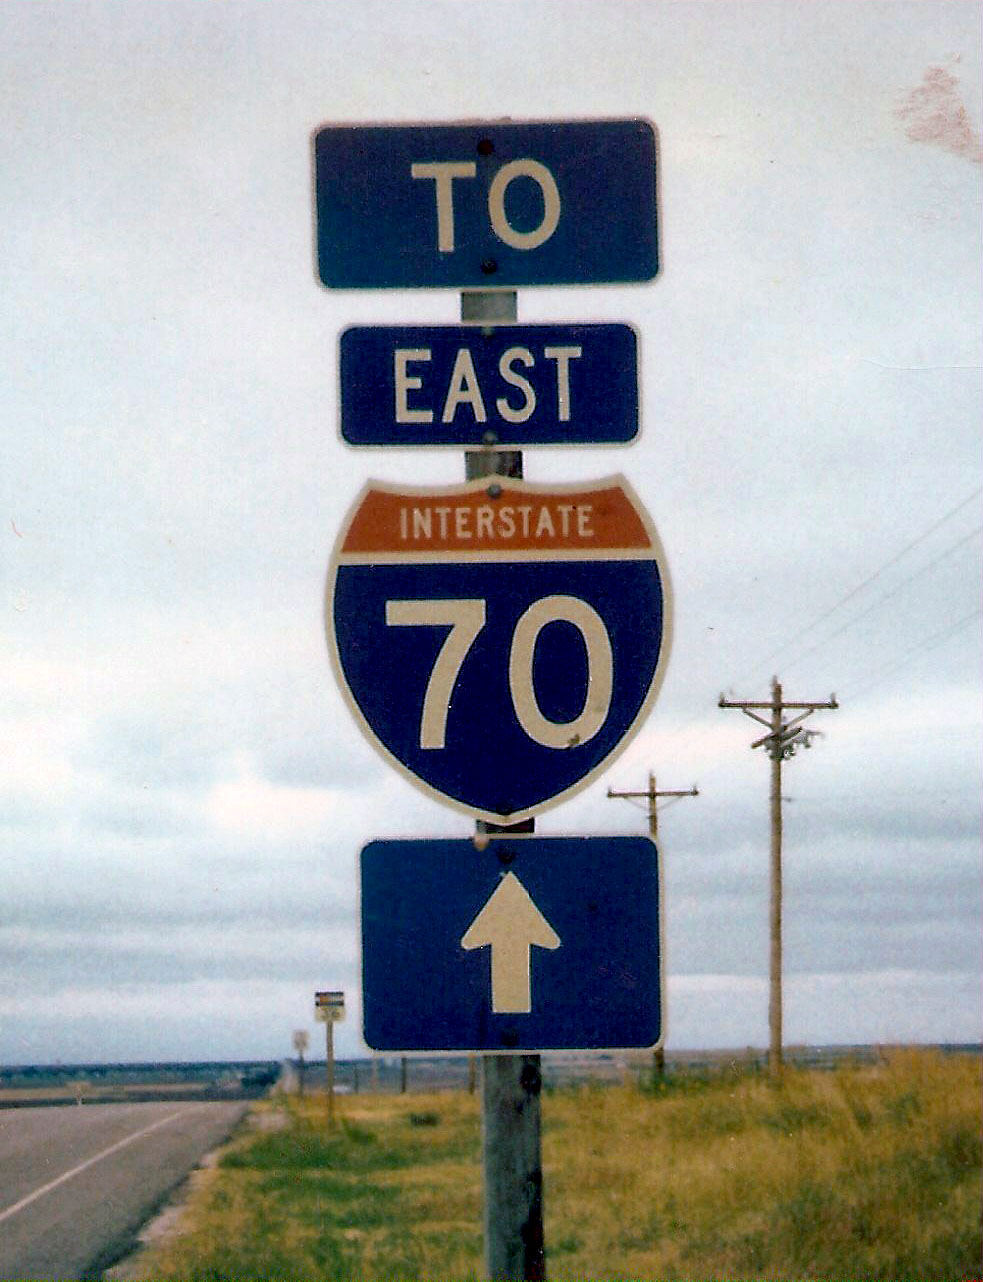 Colorado Interstate 70 sign.